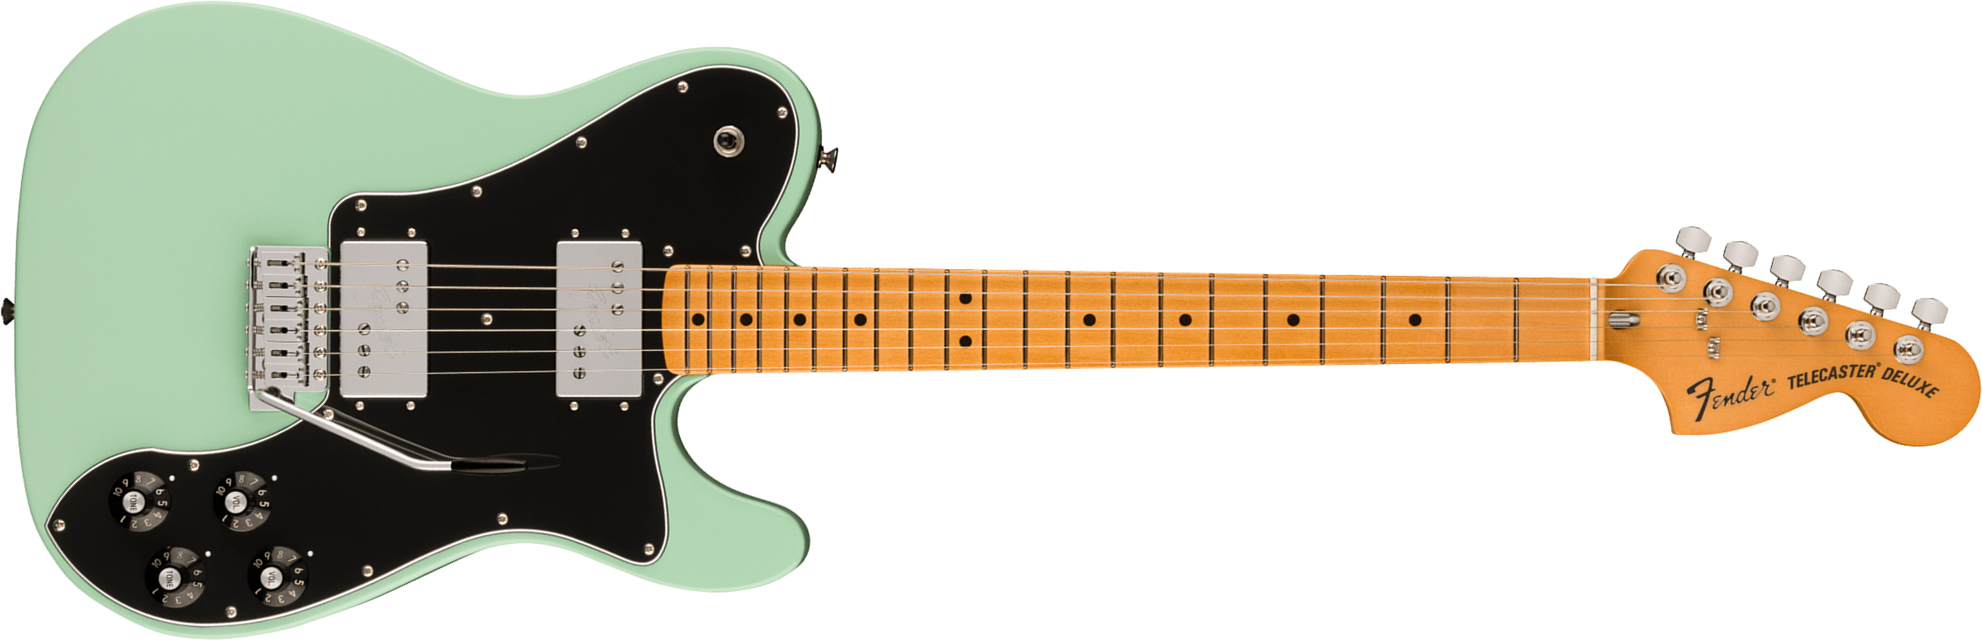 Fender Tele 70s Deluxe Tremolo Vintera 2 Mex 2h Trem Mn - Surf Green - Guitarra eléctrica con forma de tel - Main picture